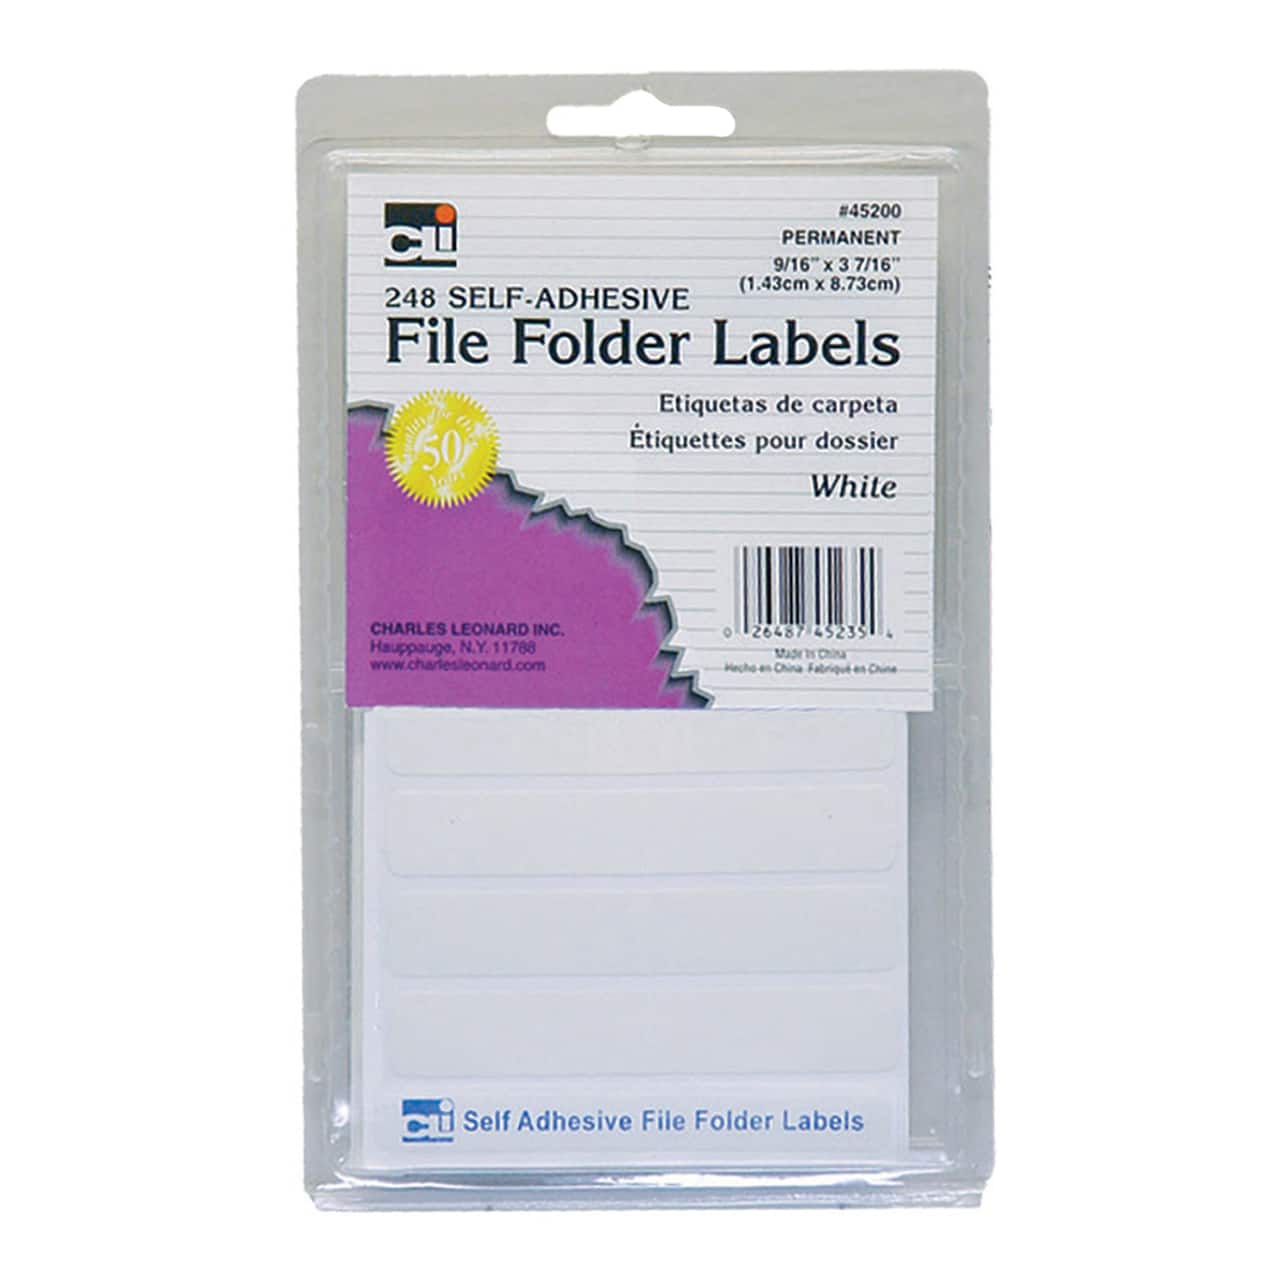 Charles Leonard File Folder Labels, 18 Packs of 248